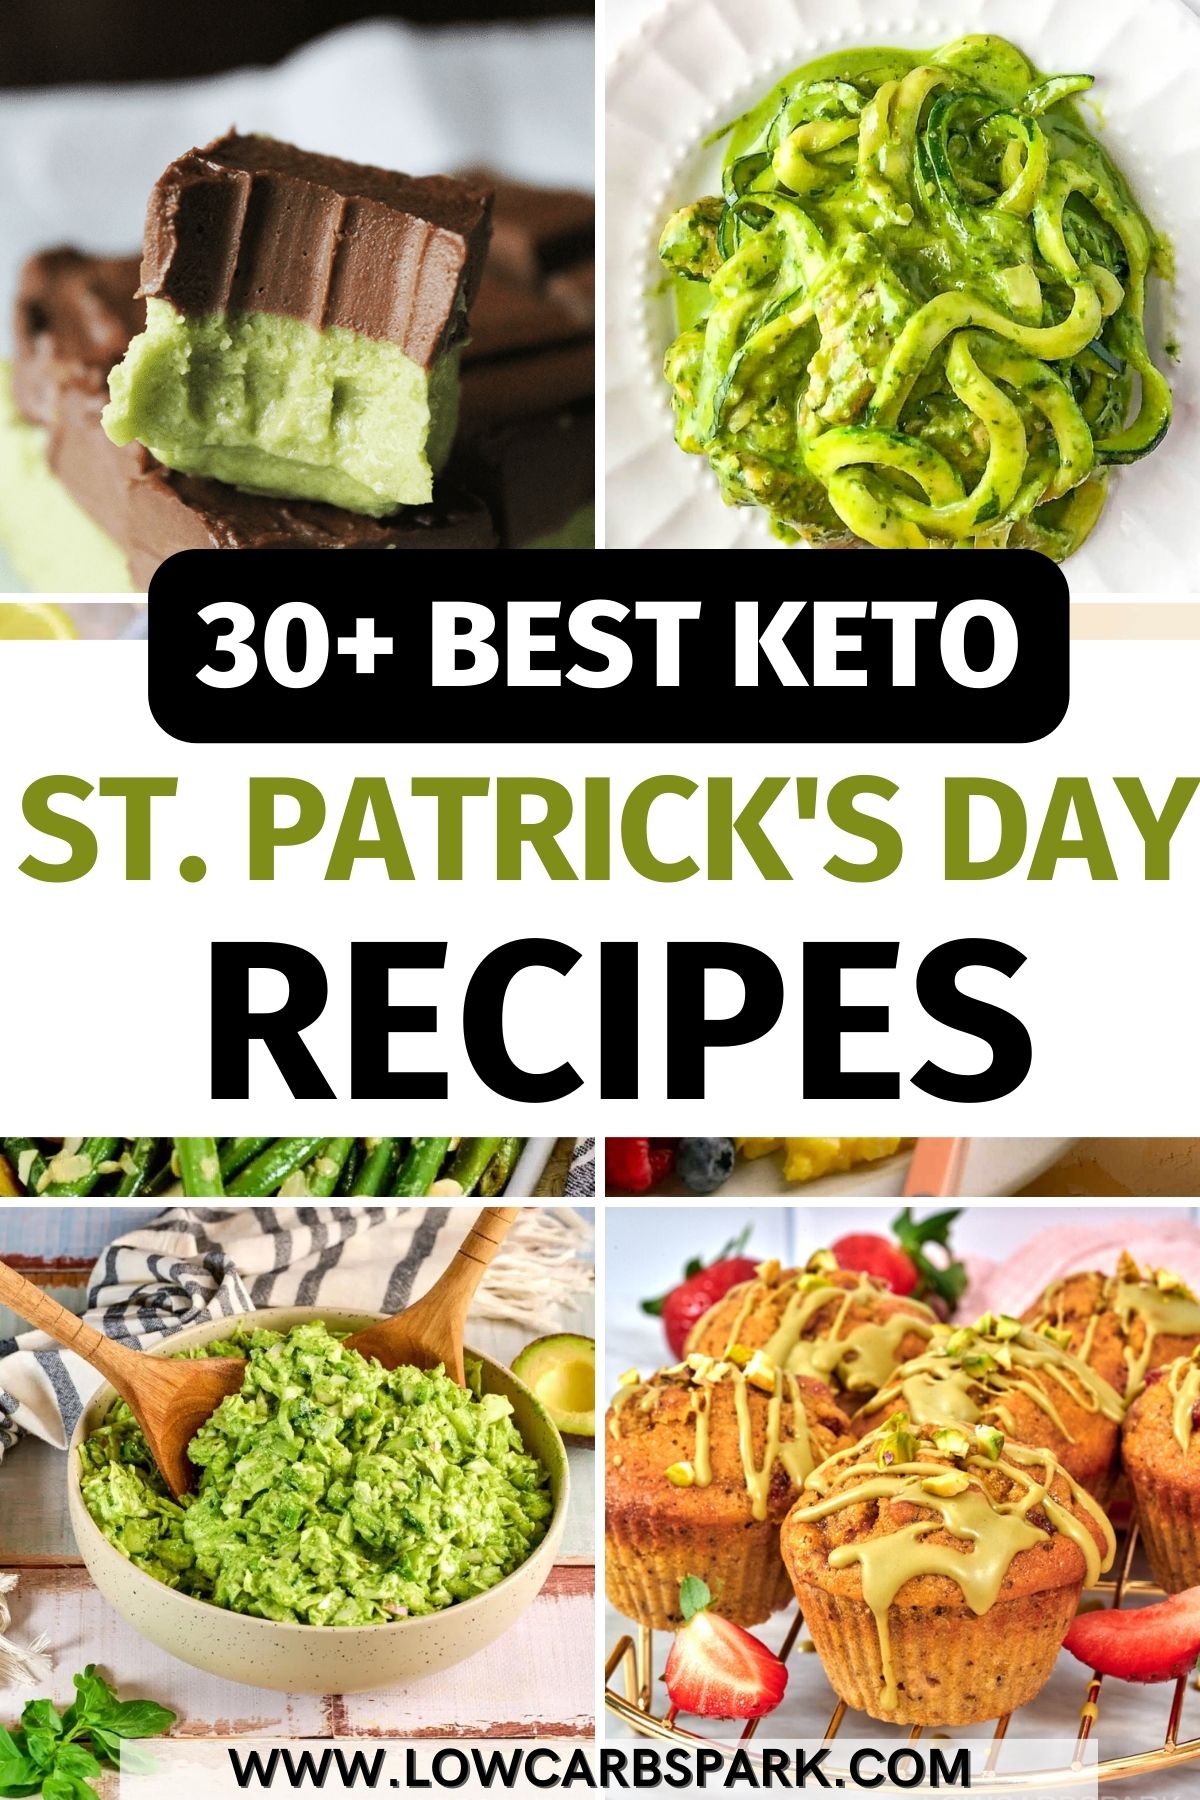 30+ Best Keto St. Patrick's Day Recipes